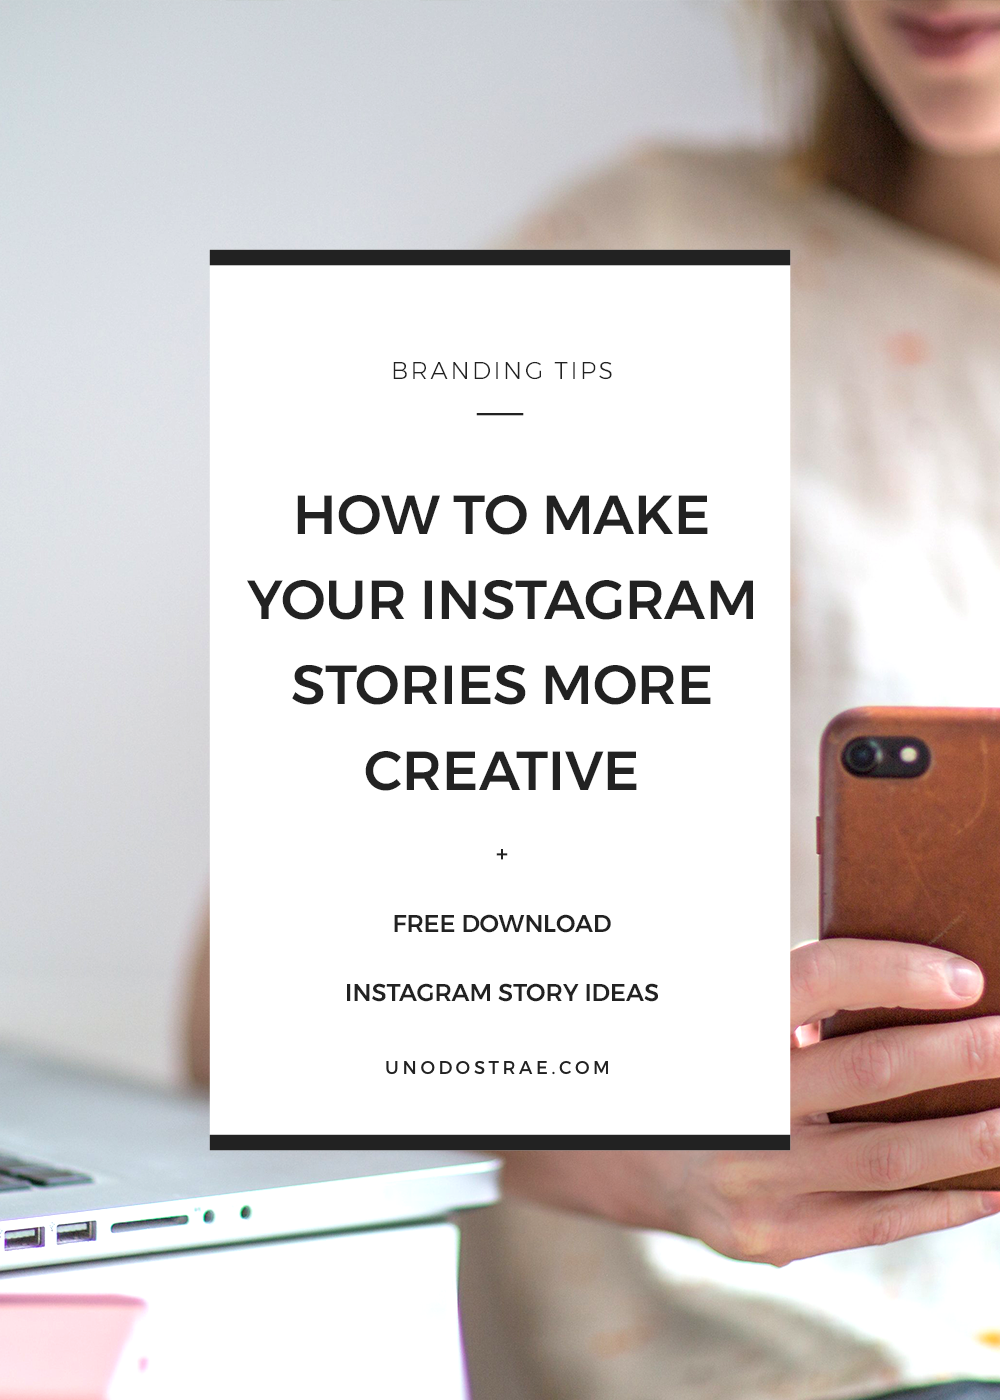 How to make Instagram stories more creative-unodostrae.com-uno dos tare-branding tips-social media tips-instagram stories tips-instagram tips